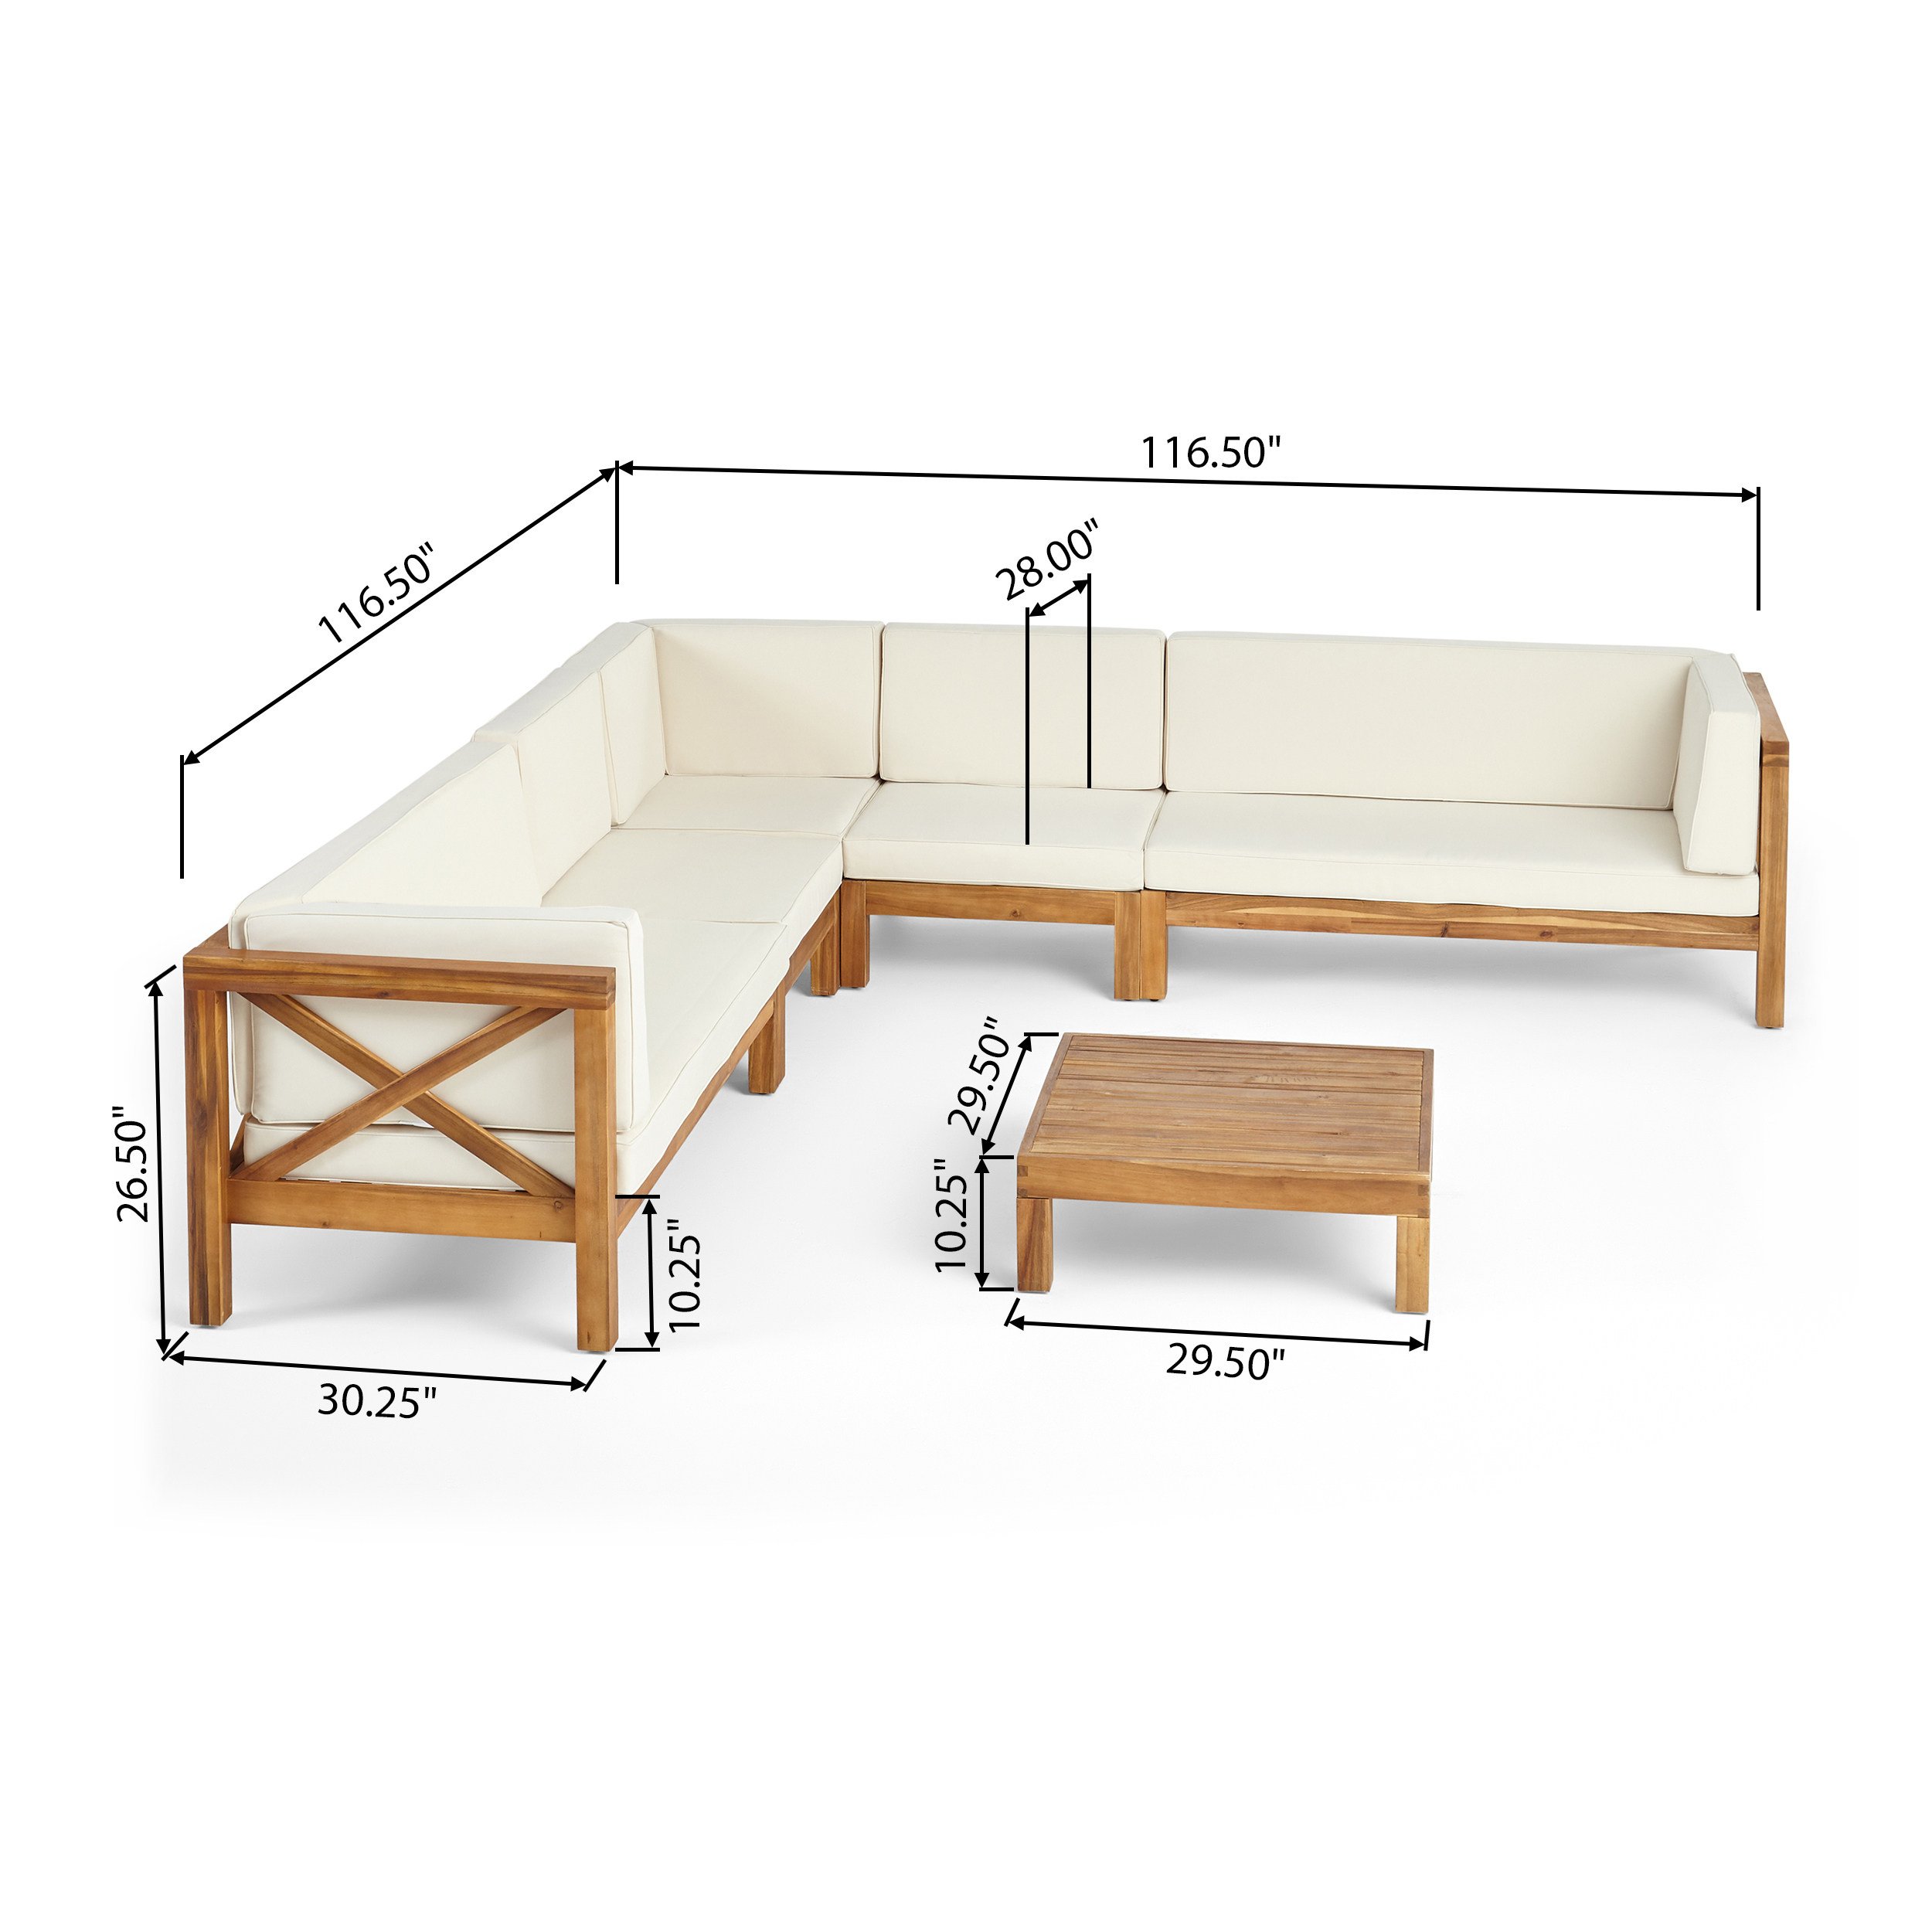 Bunny Outdoor 7 Seater Acacia Wood Sectional Sofa Set - Teak + Anemone